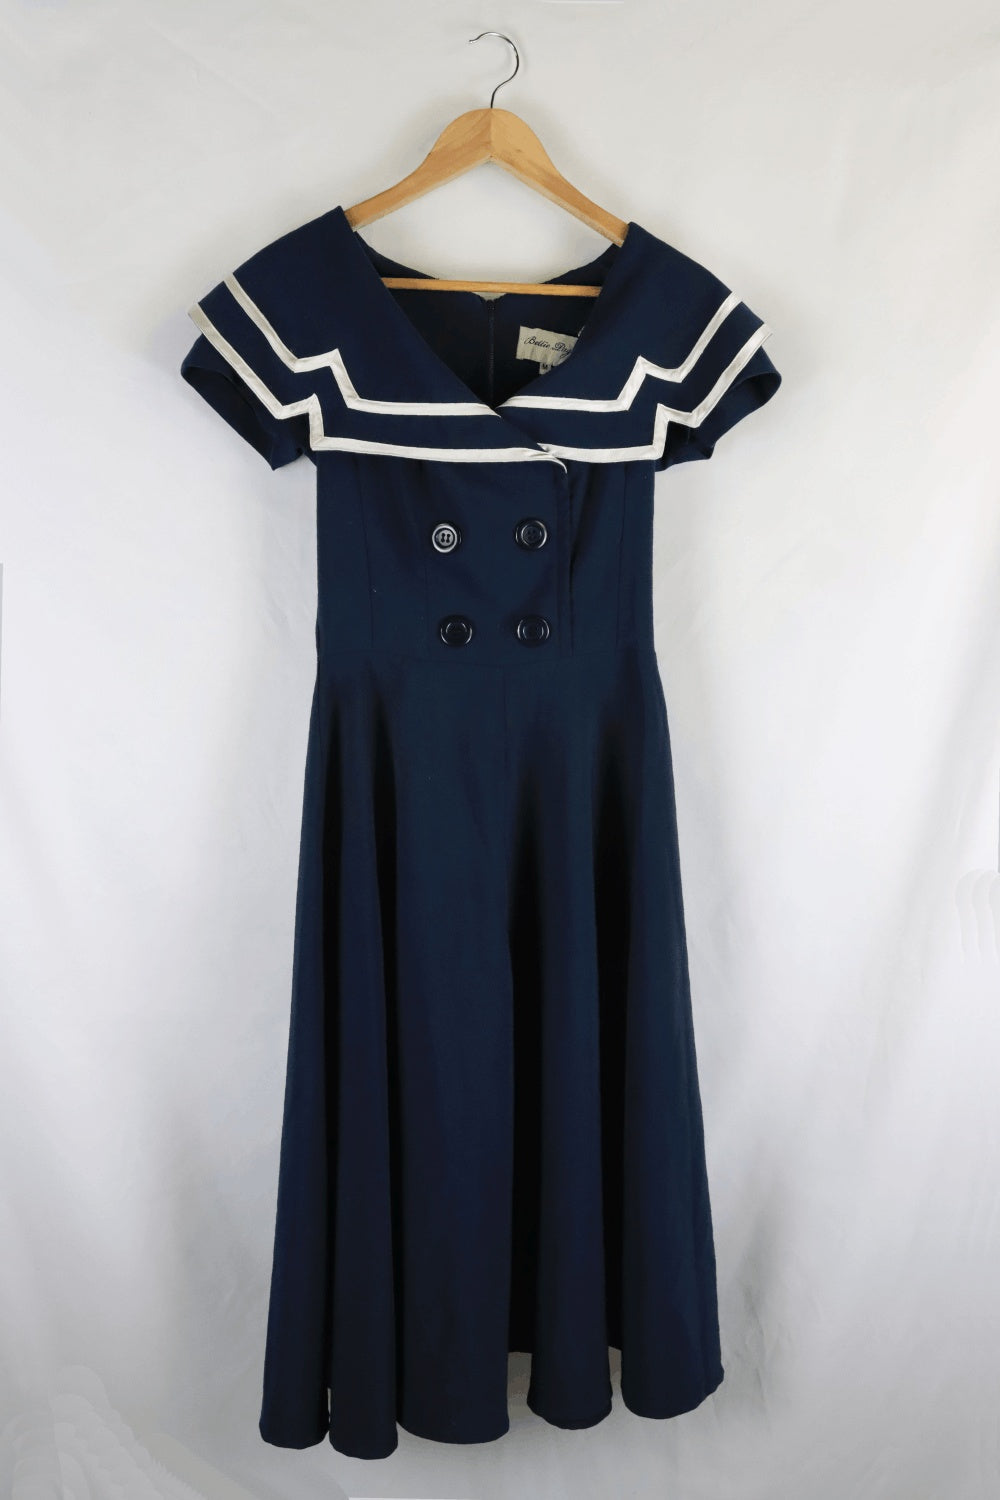 Bettie Page Navy Dress M